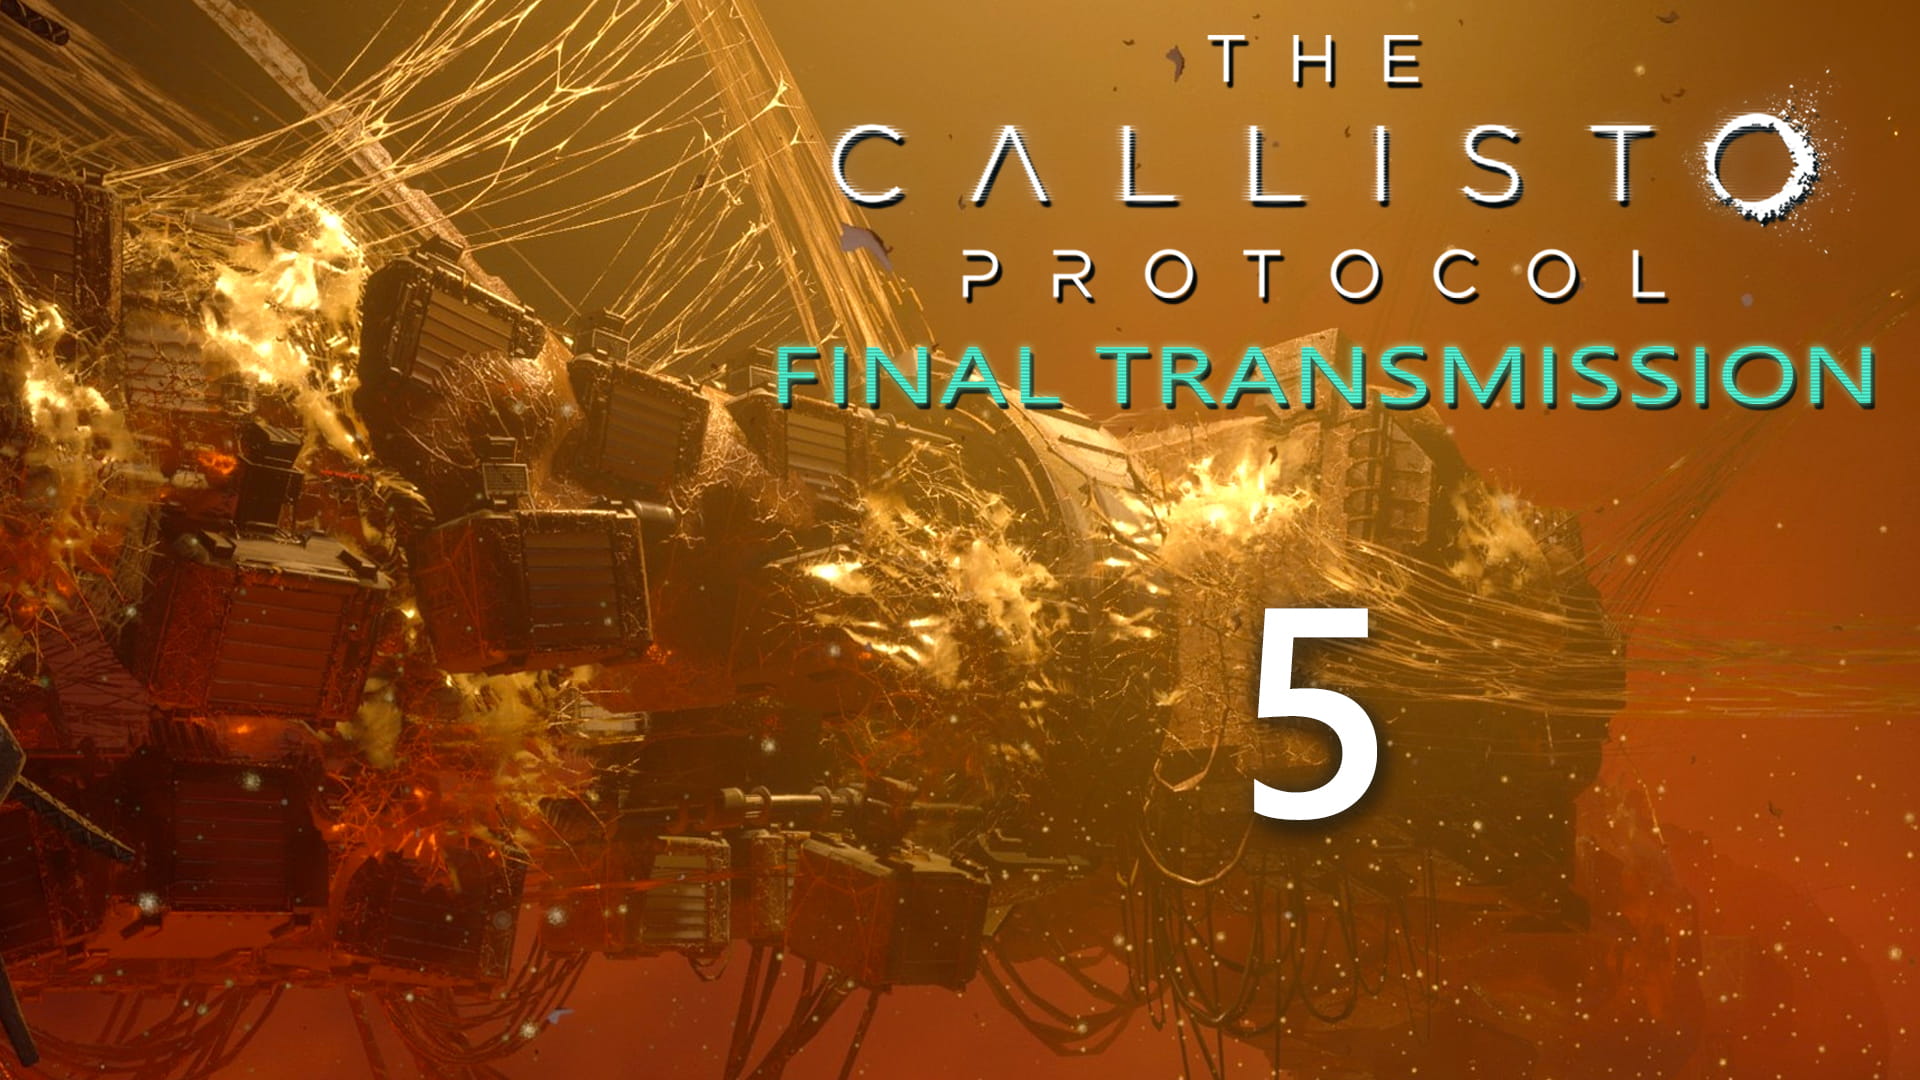 Final transmission callisto. The Callisto Protocol Final transmission poster. The Callisto Protocol Final transmission logo.